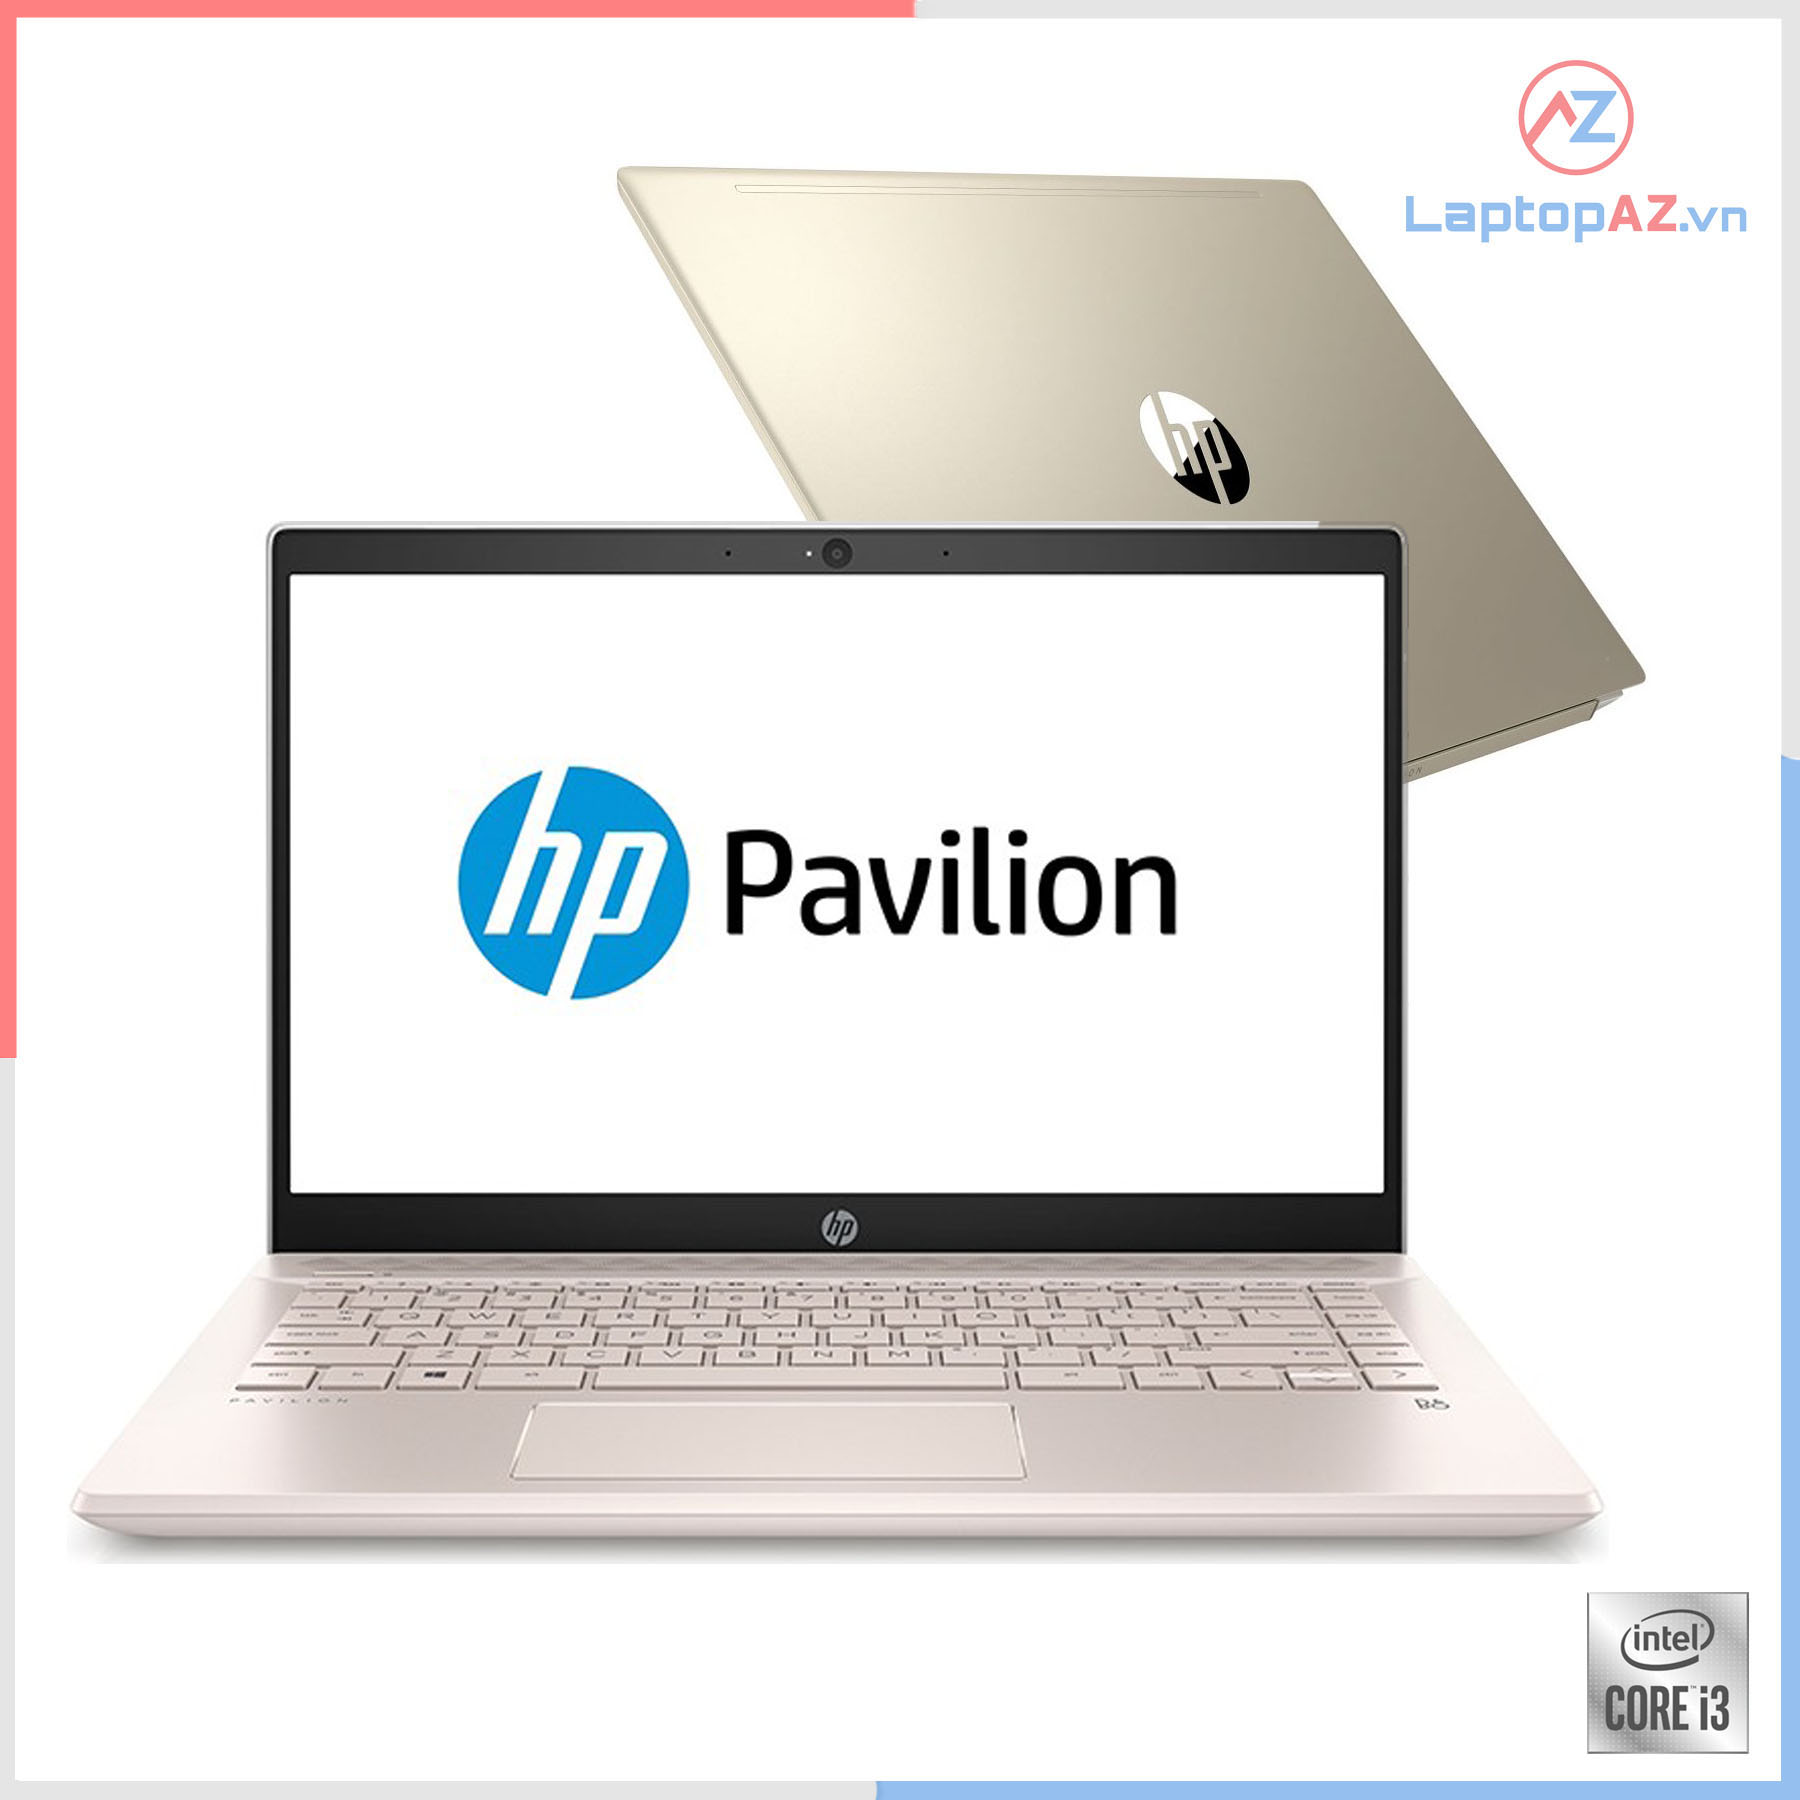 Laptop cũ HP Pavilion 14-ce3013TU (Intel Core i3 8130U, 4GB, 256GB, VGA UHD 620, 14 inch FHD)